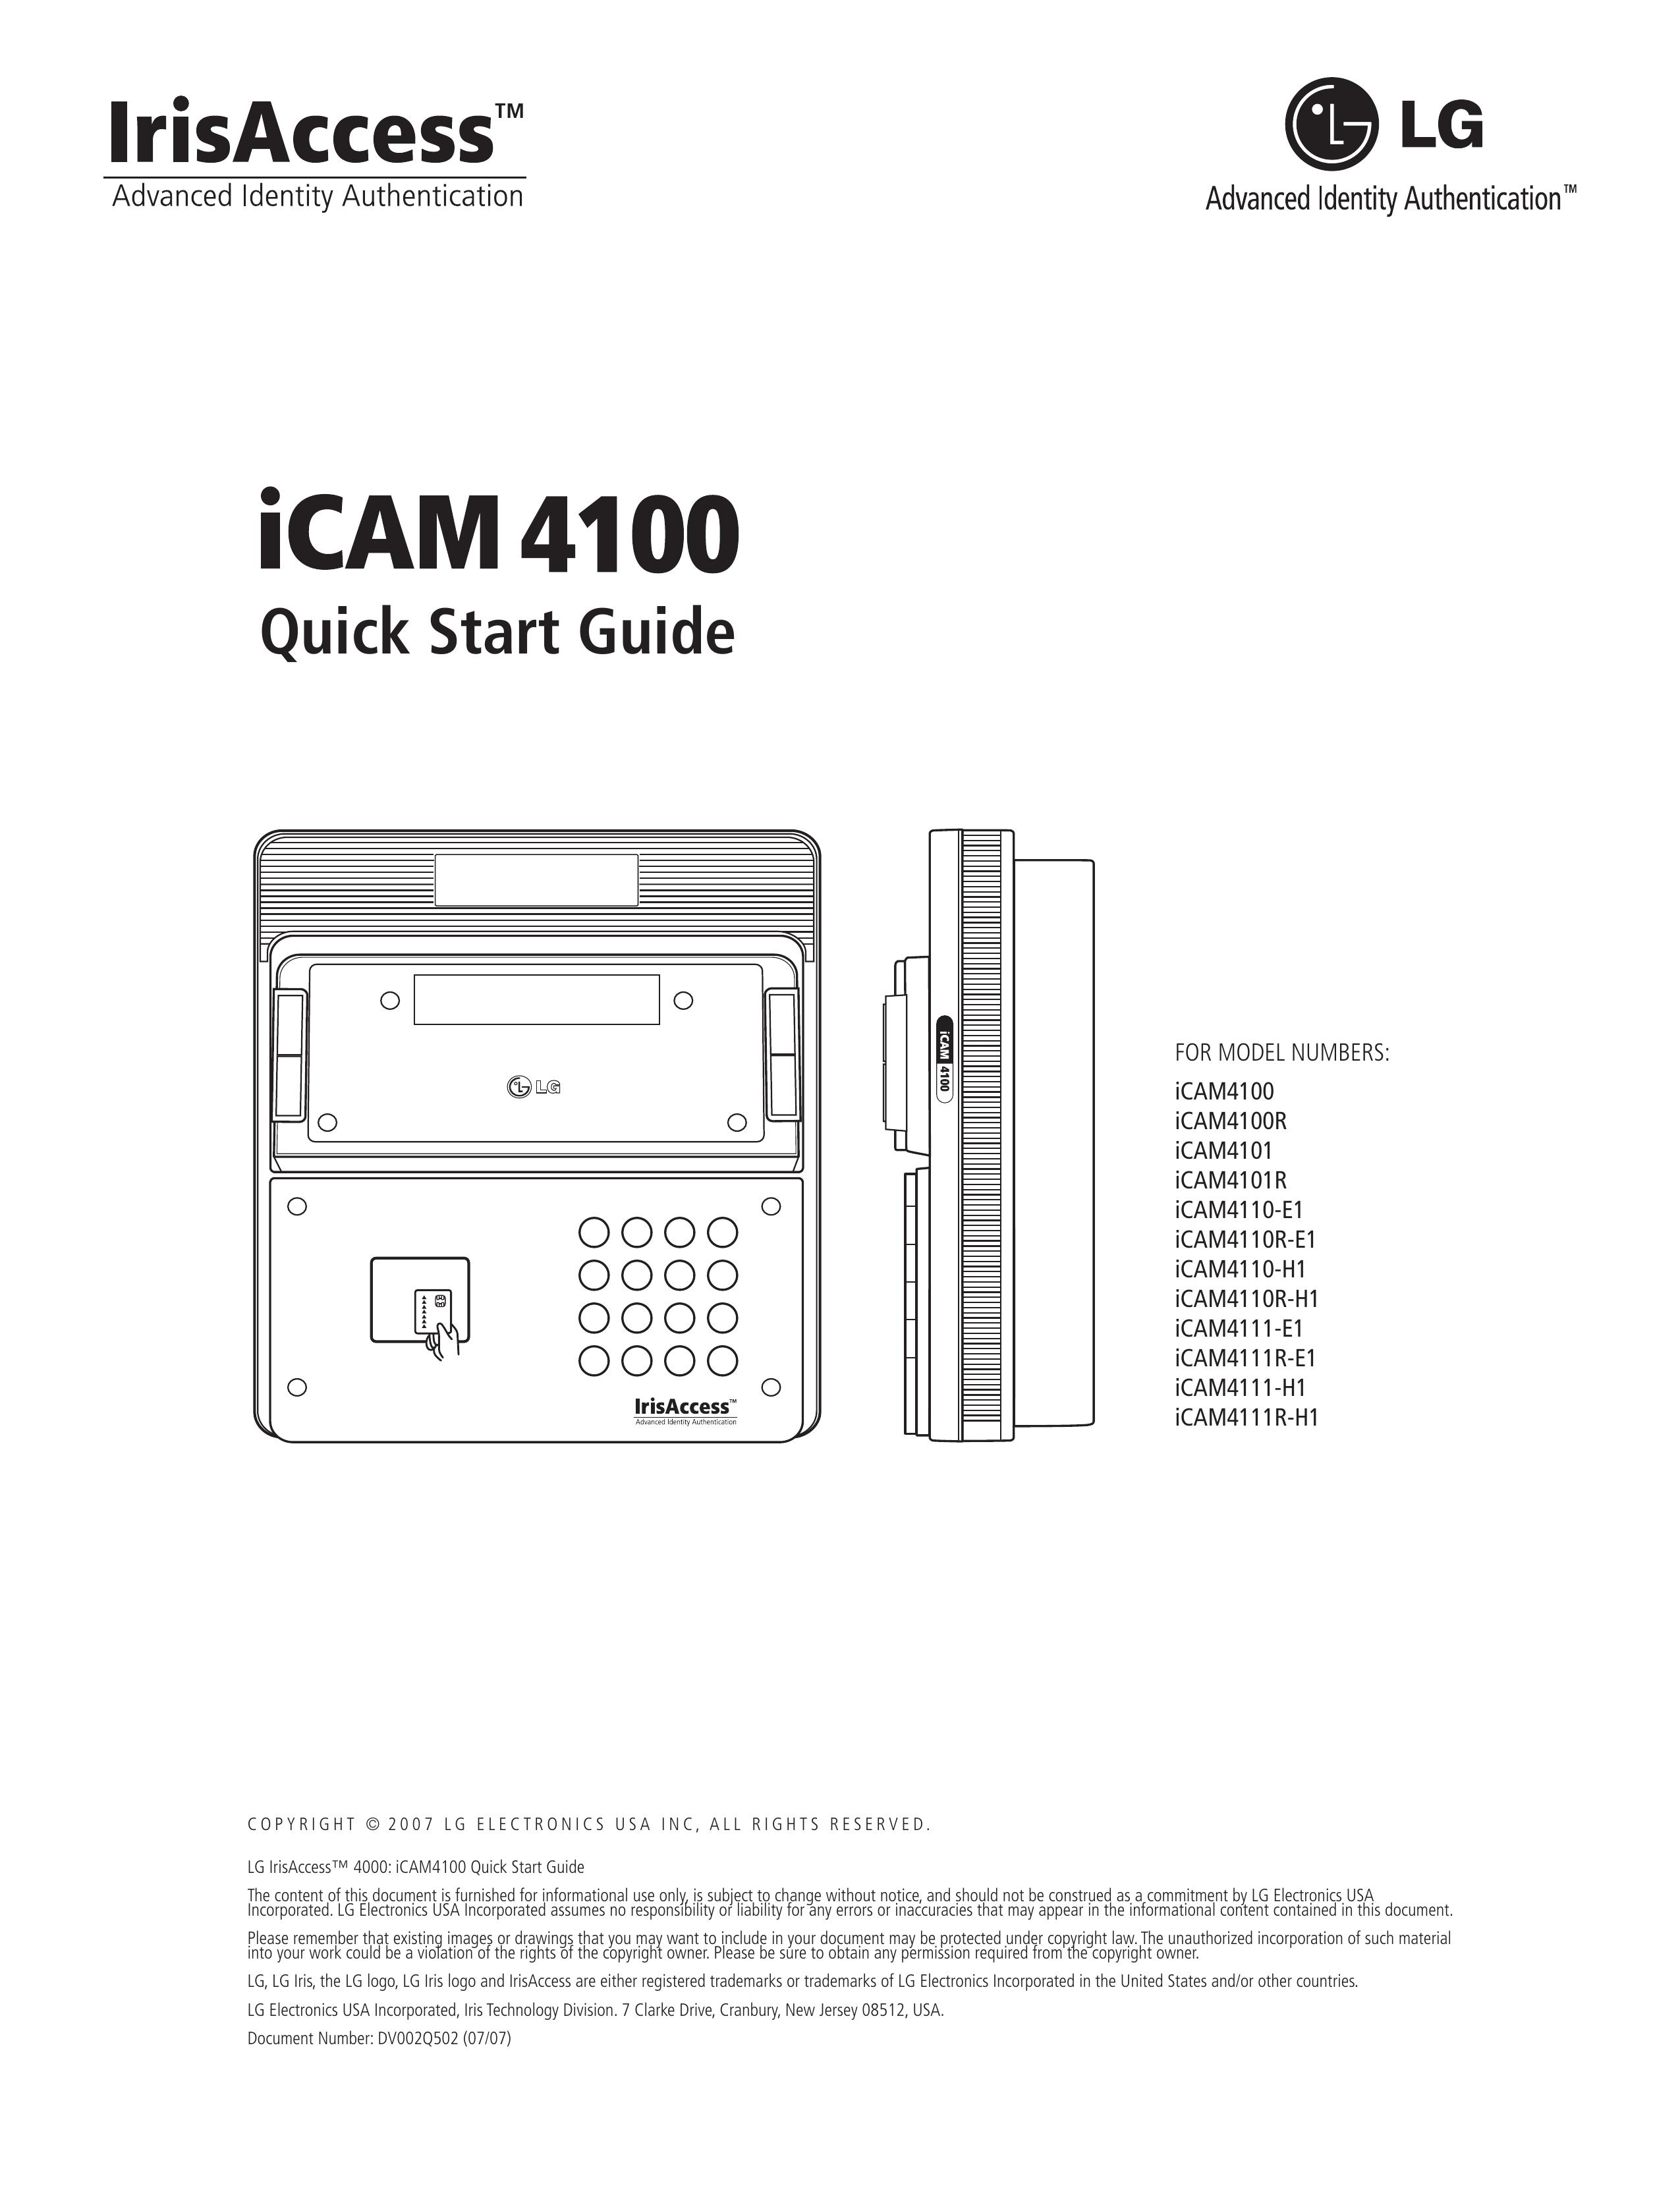 LG Electronics iCAM4110R-E1 Digital Camera User Manual